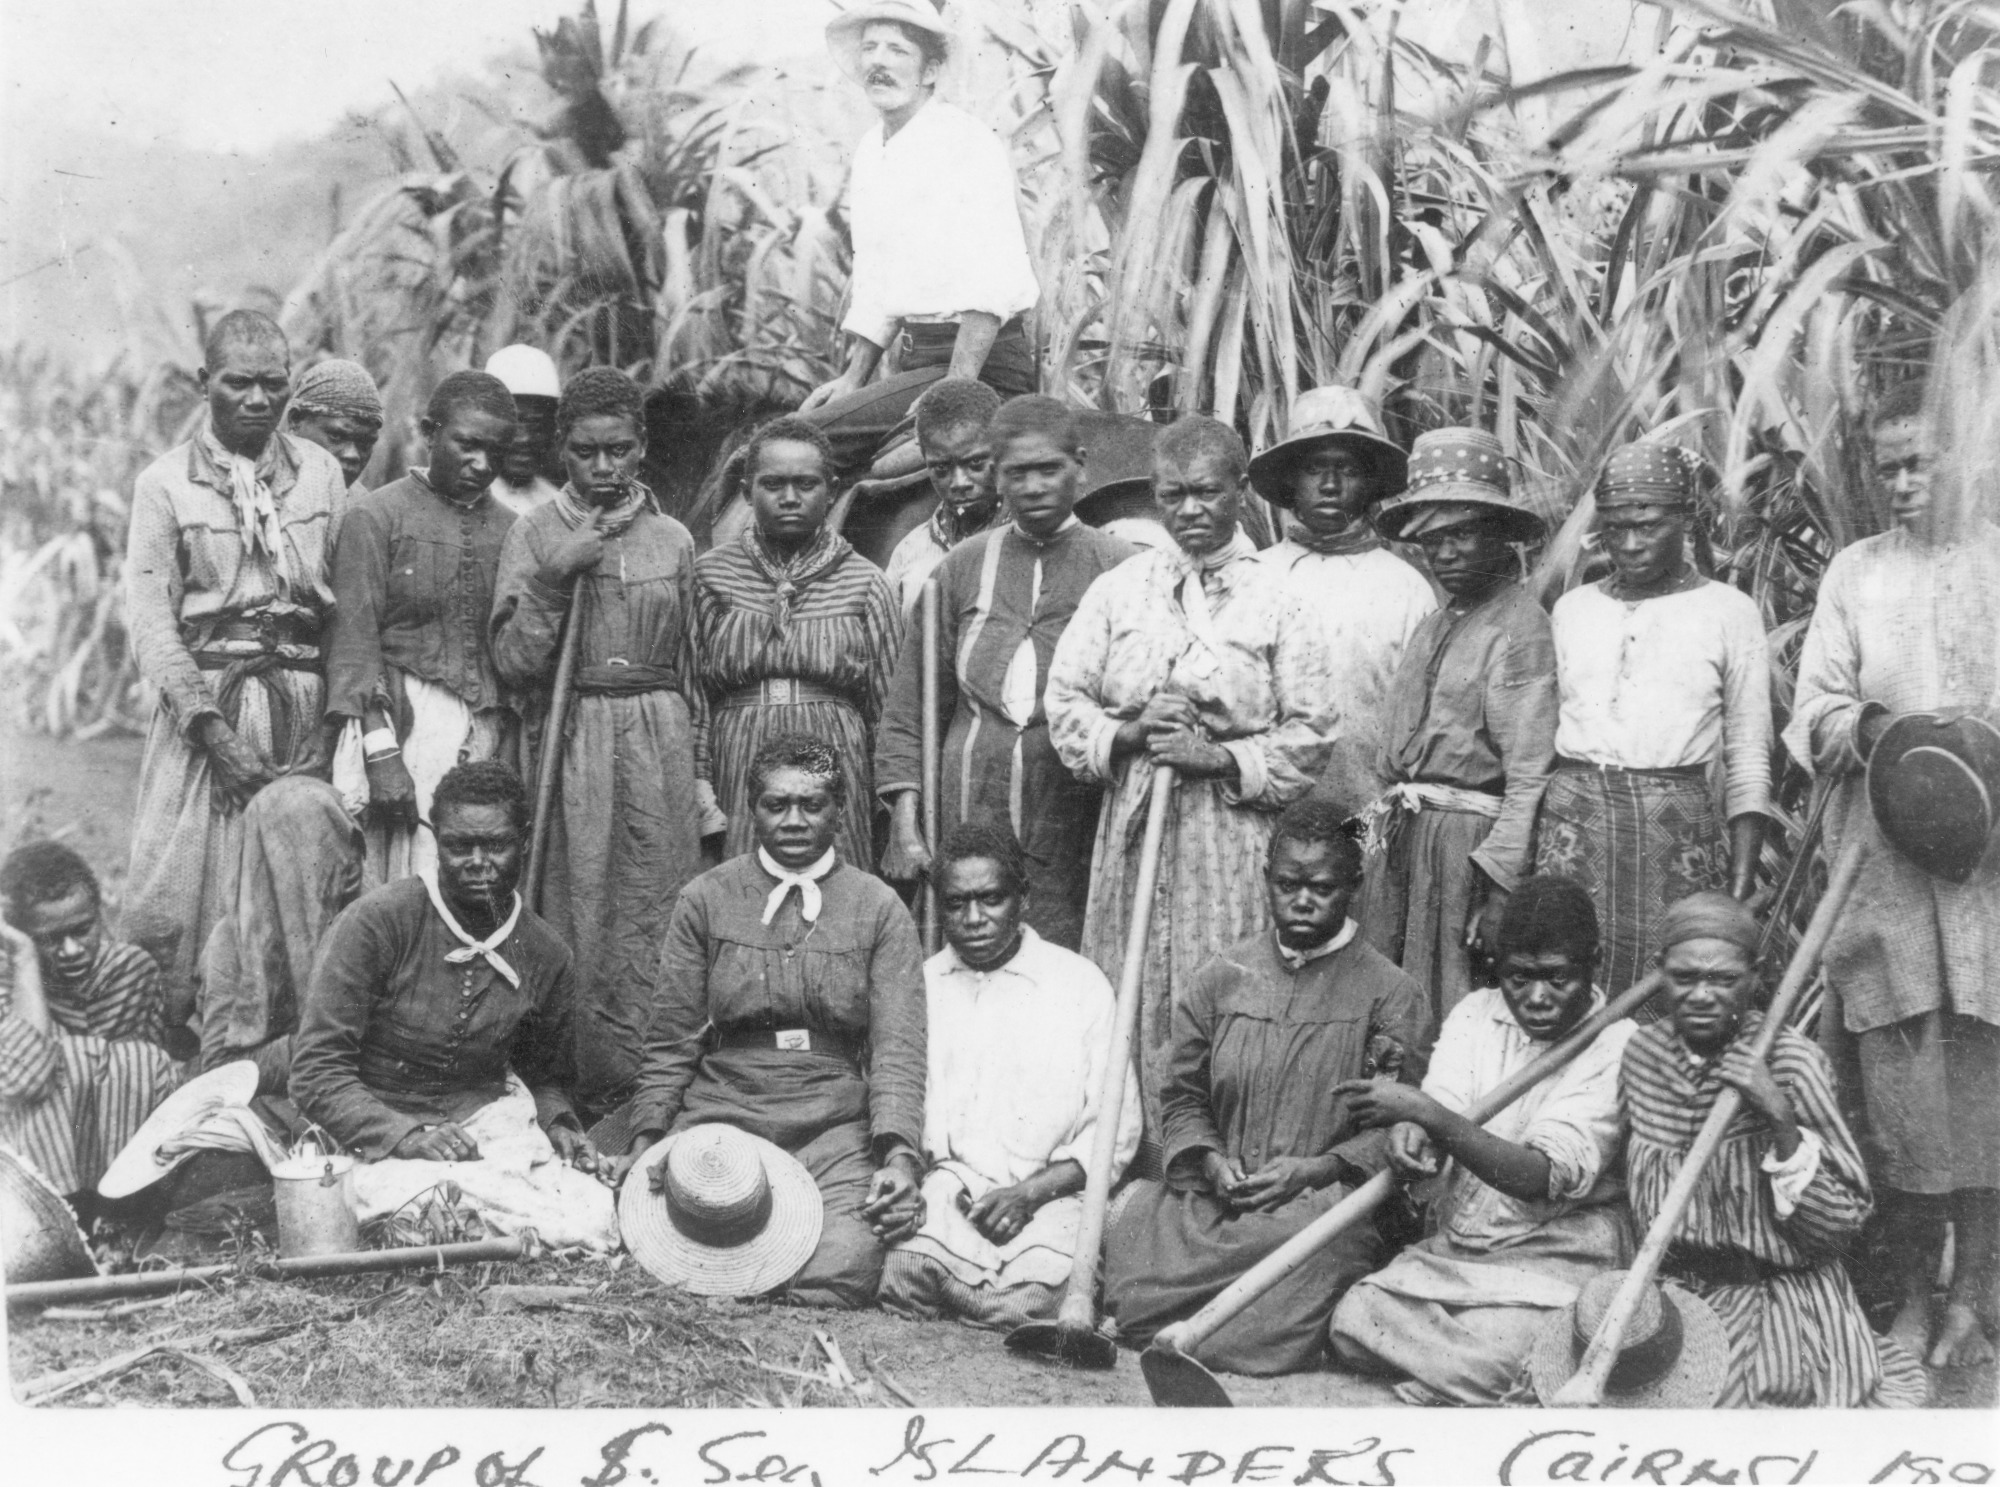 Group of Australian South Sea Islander women labourers on a sugar cane plantation near Cairns, Queensland, about 1895